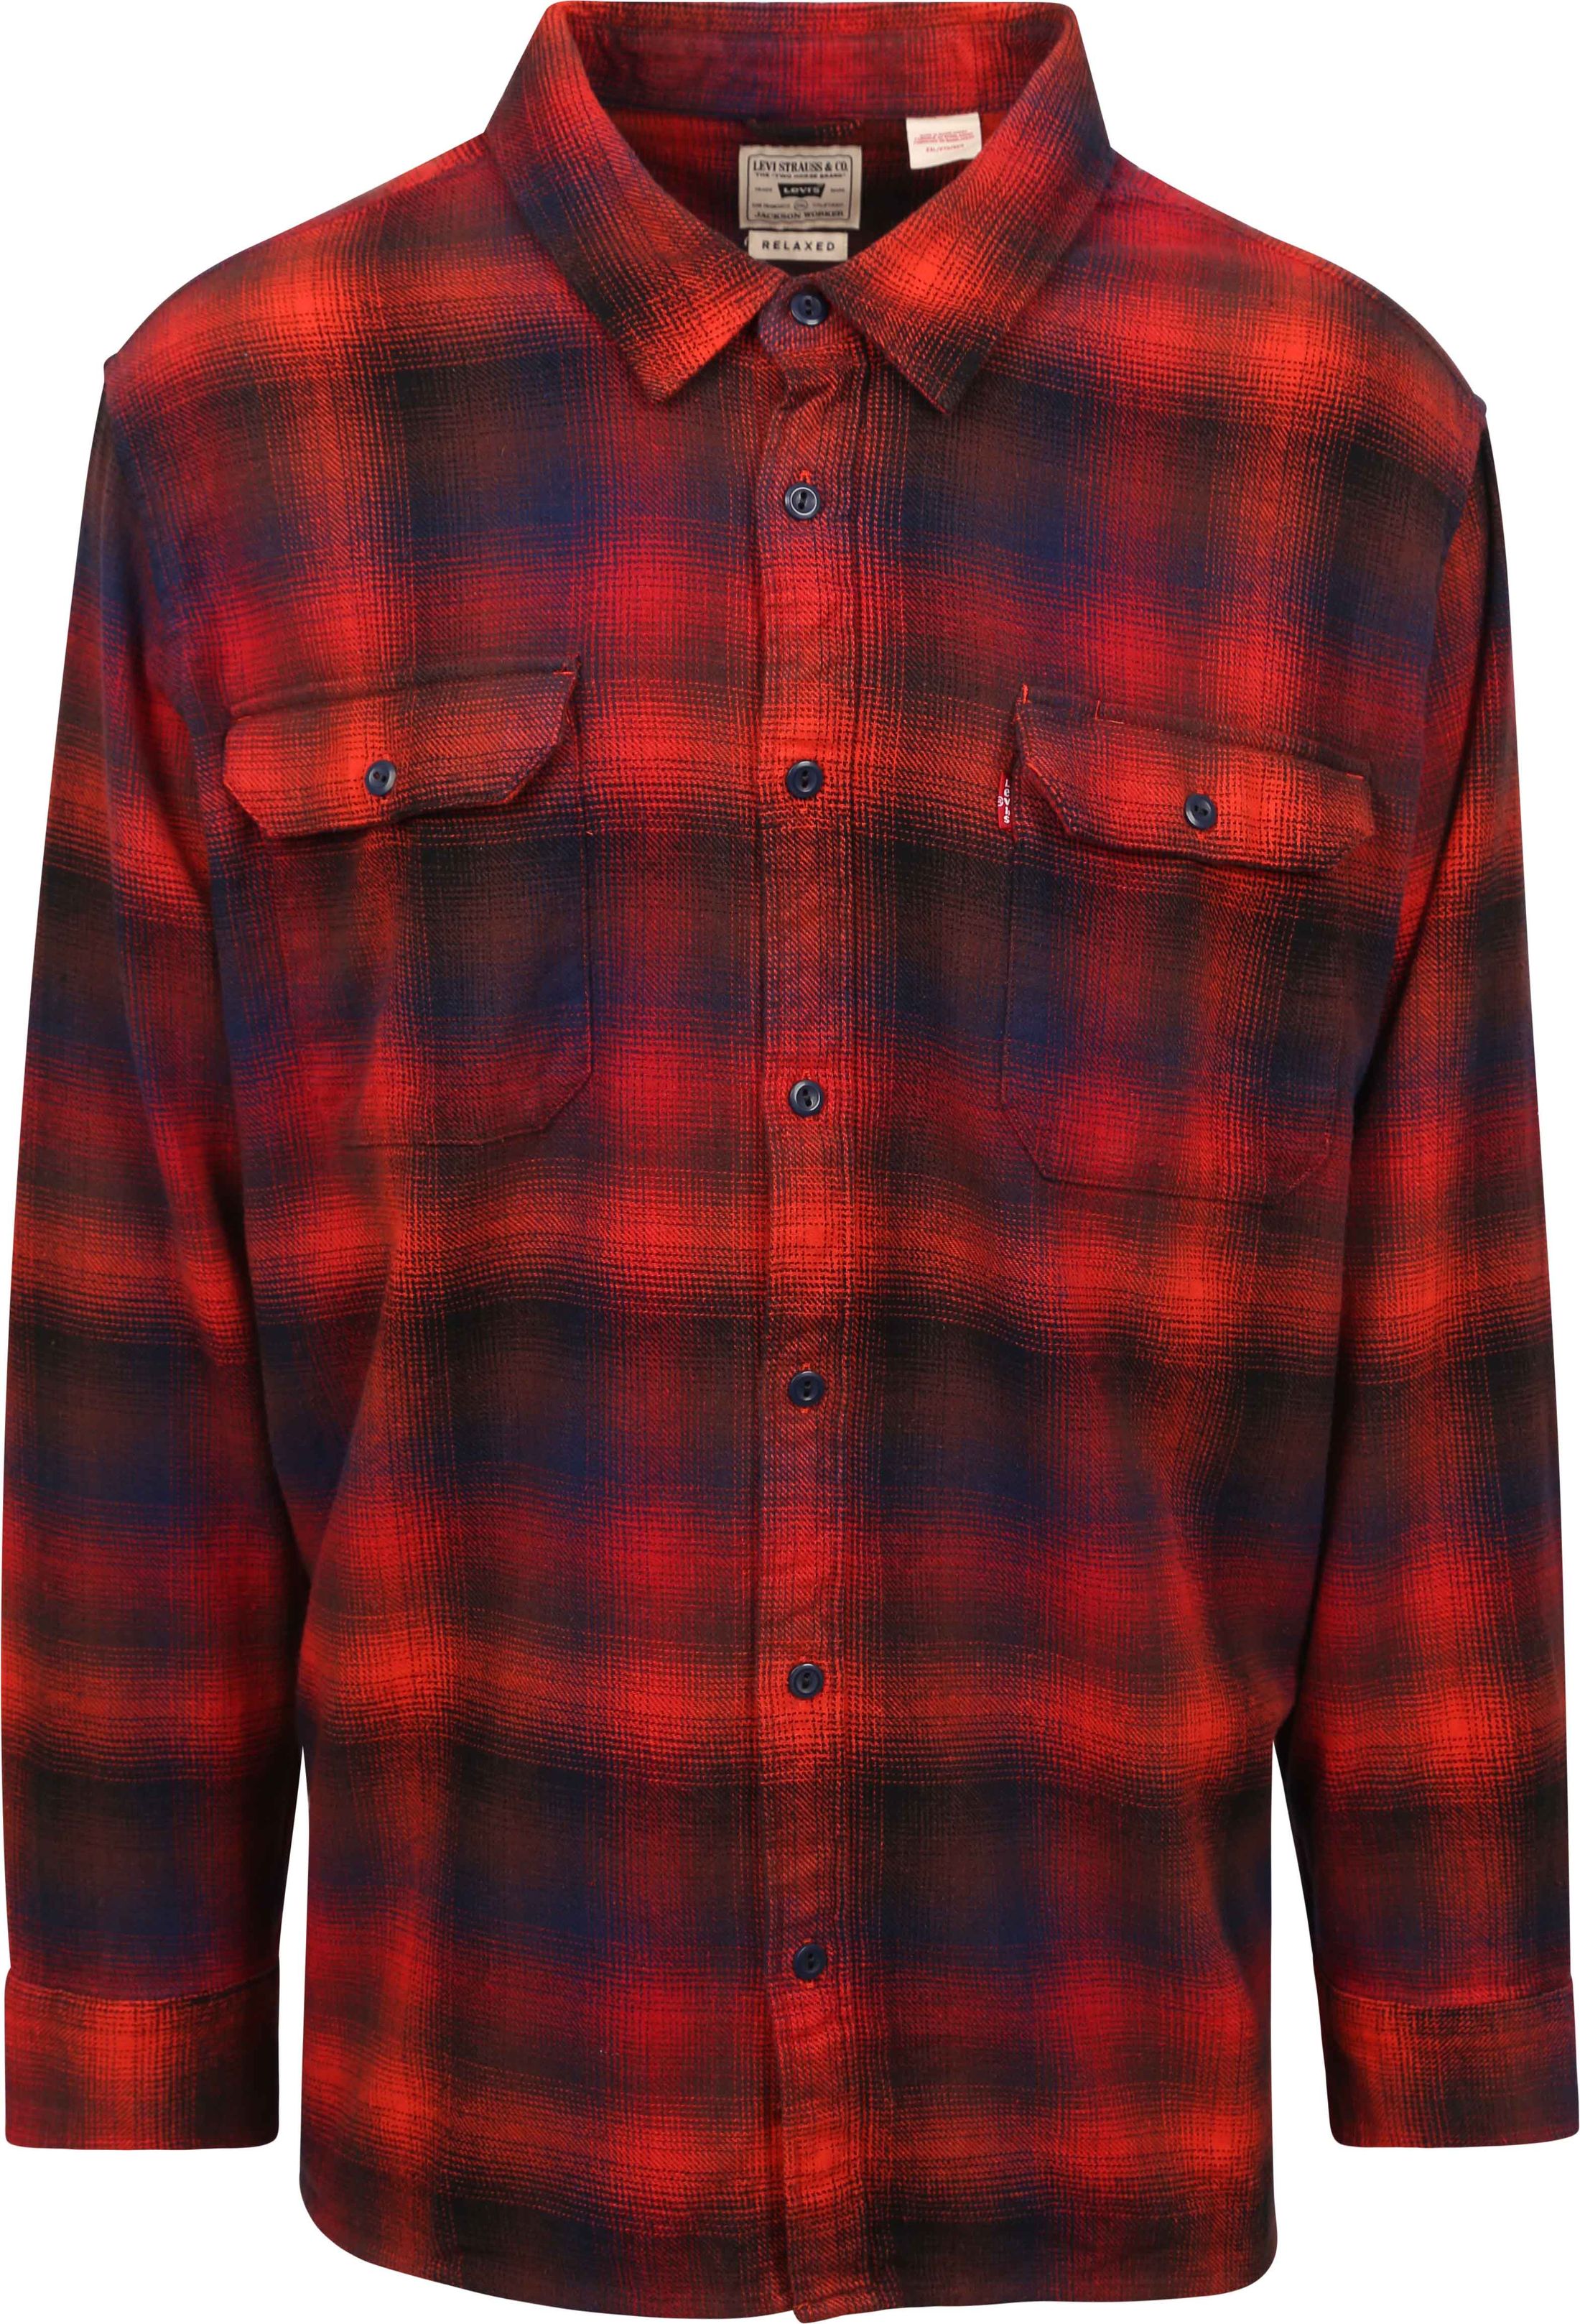 Levi's Overshirt Plaid  Red size 4XL